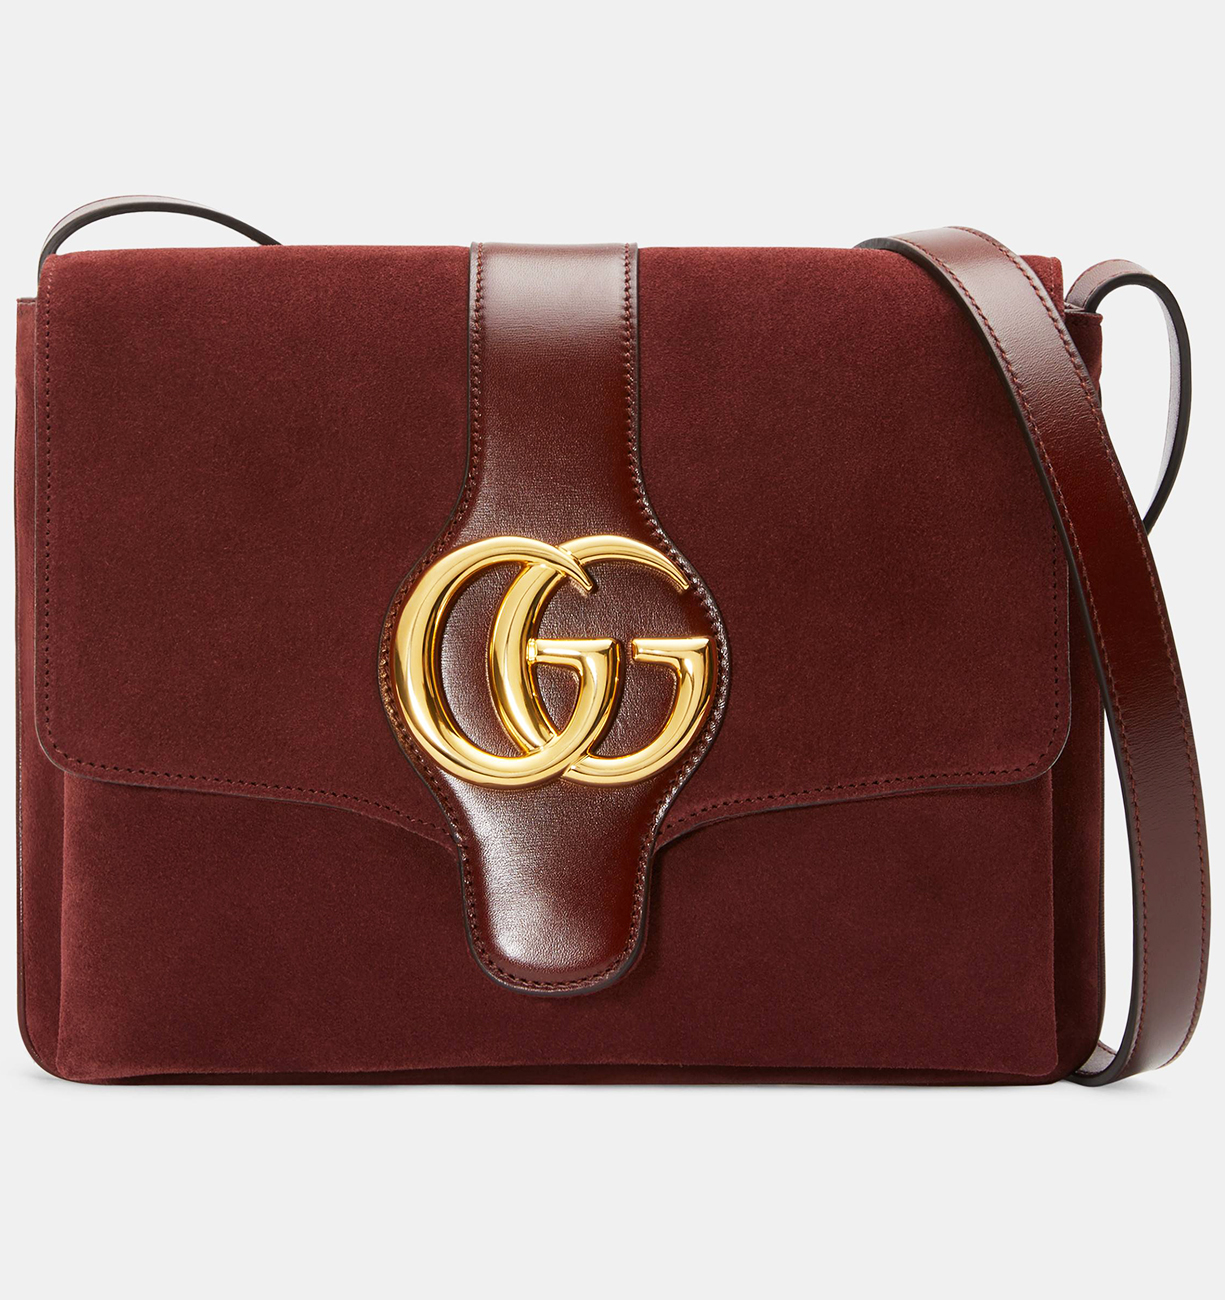 gucci 2019 handbags